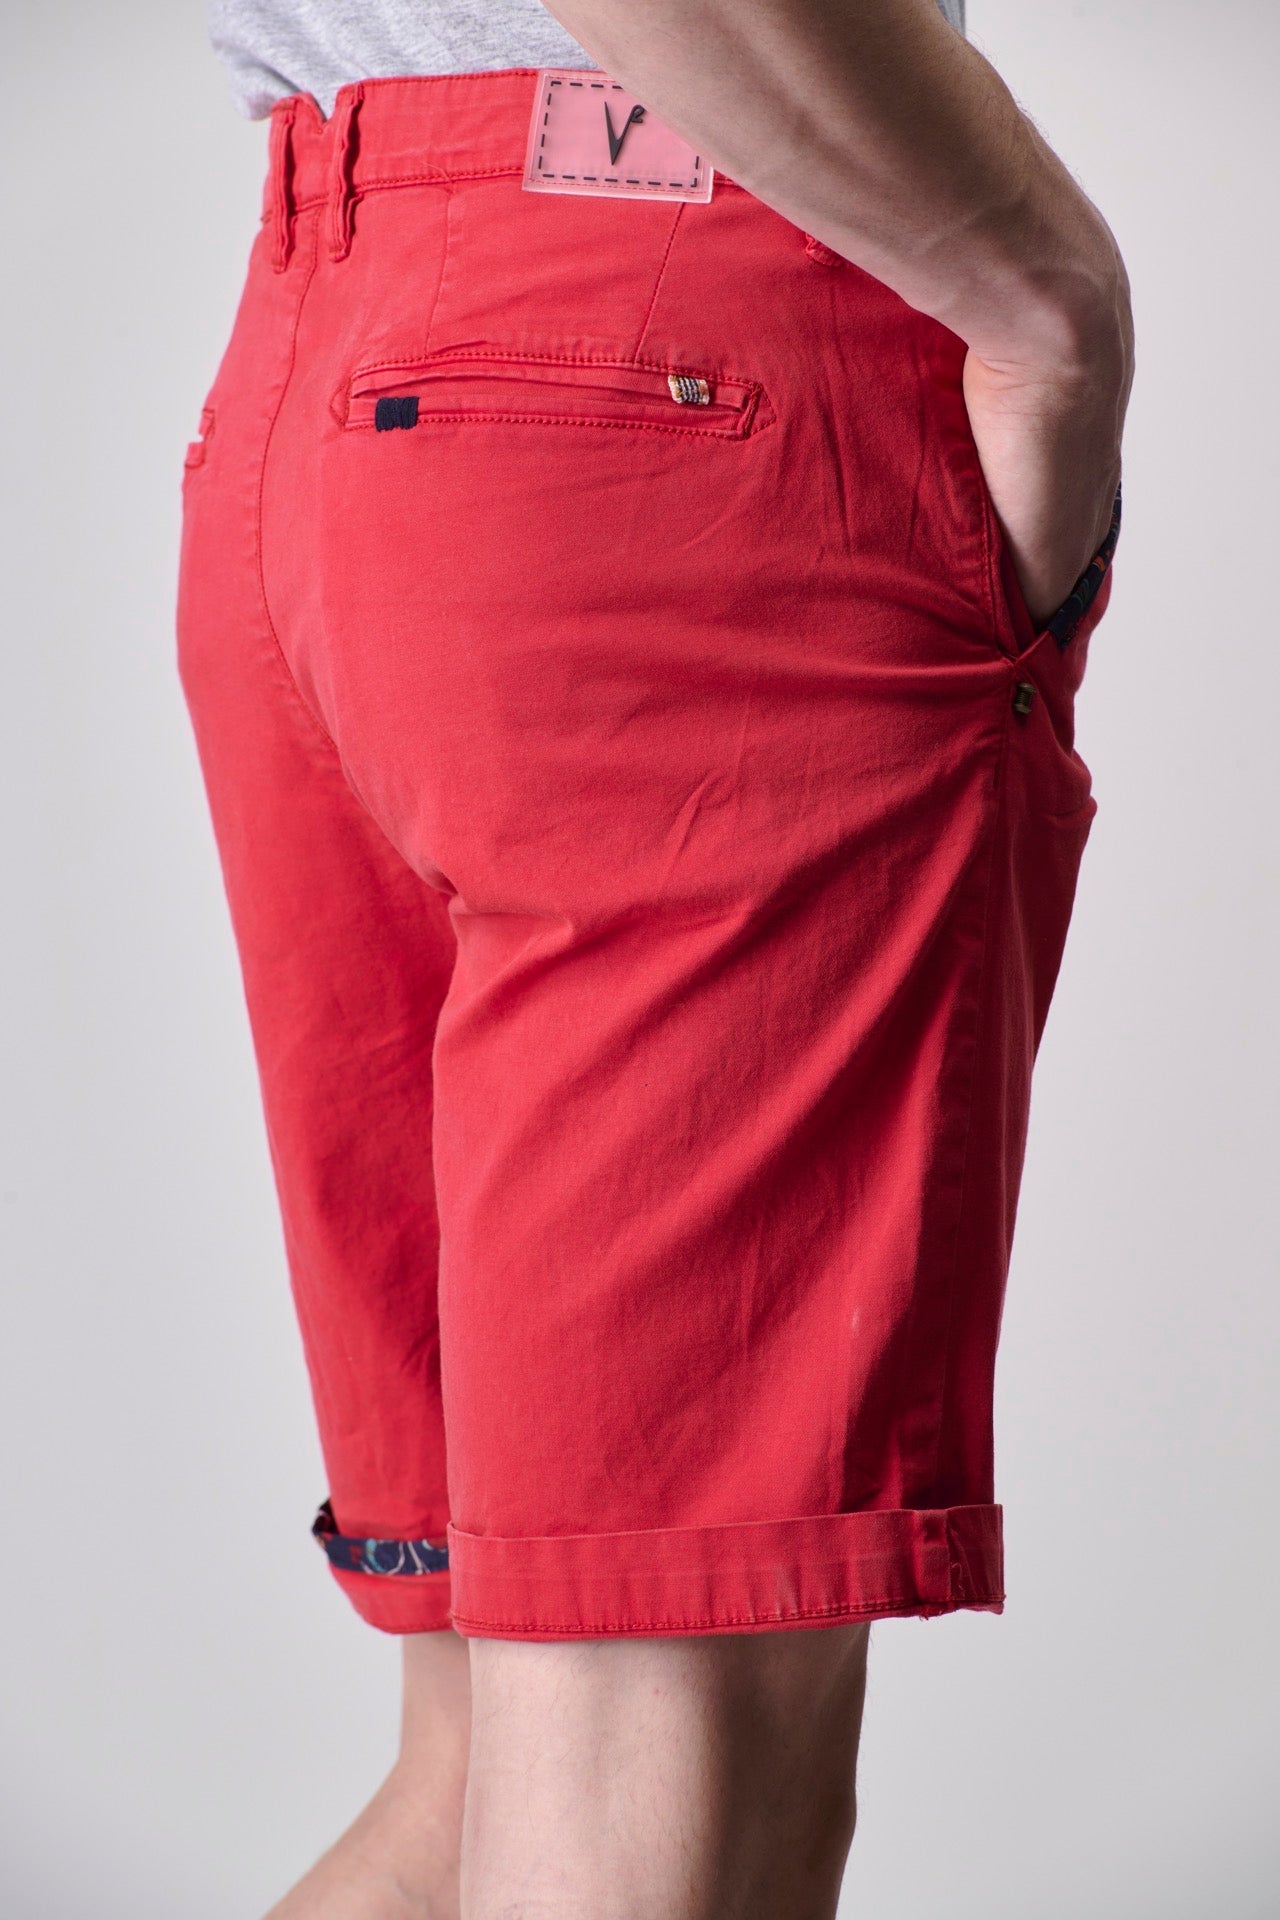 Red Chinos Shorts